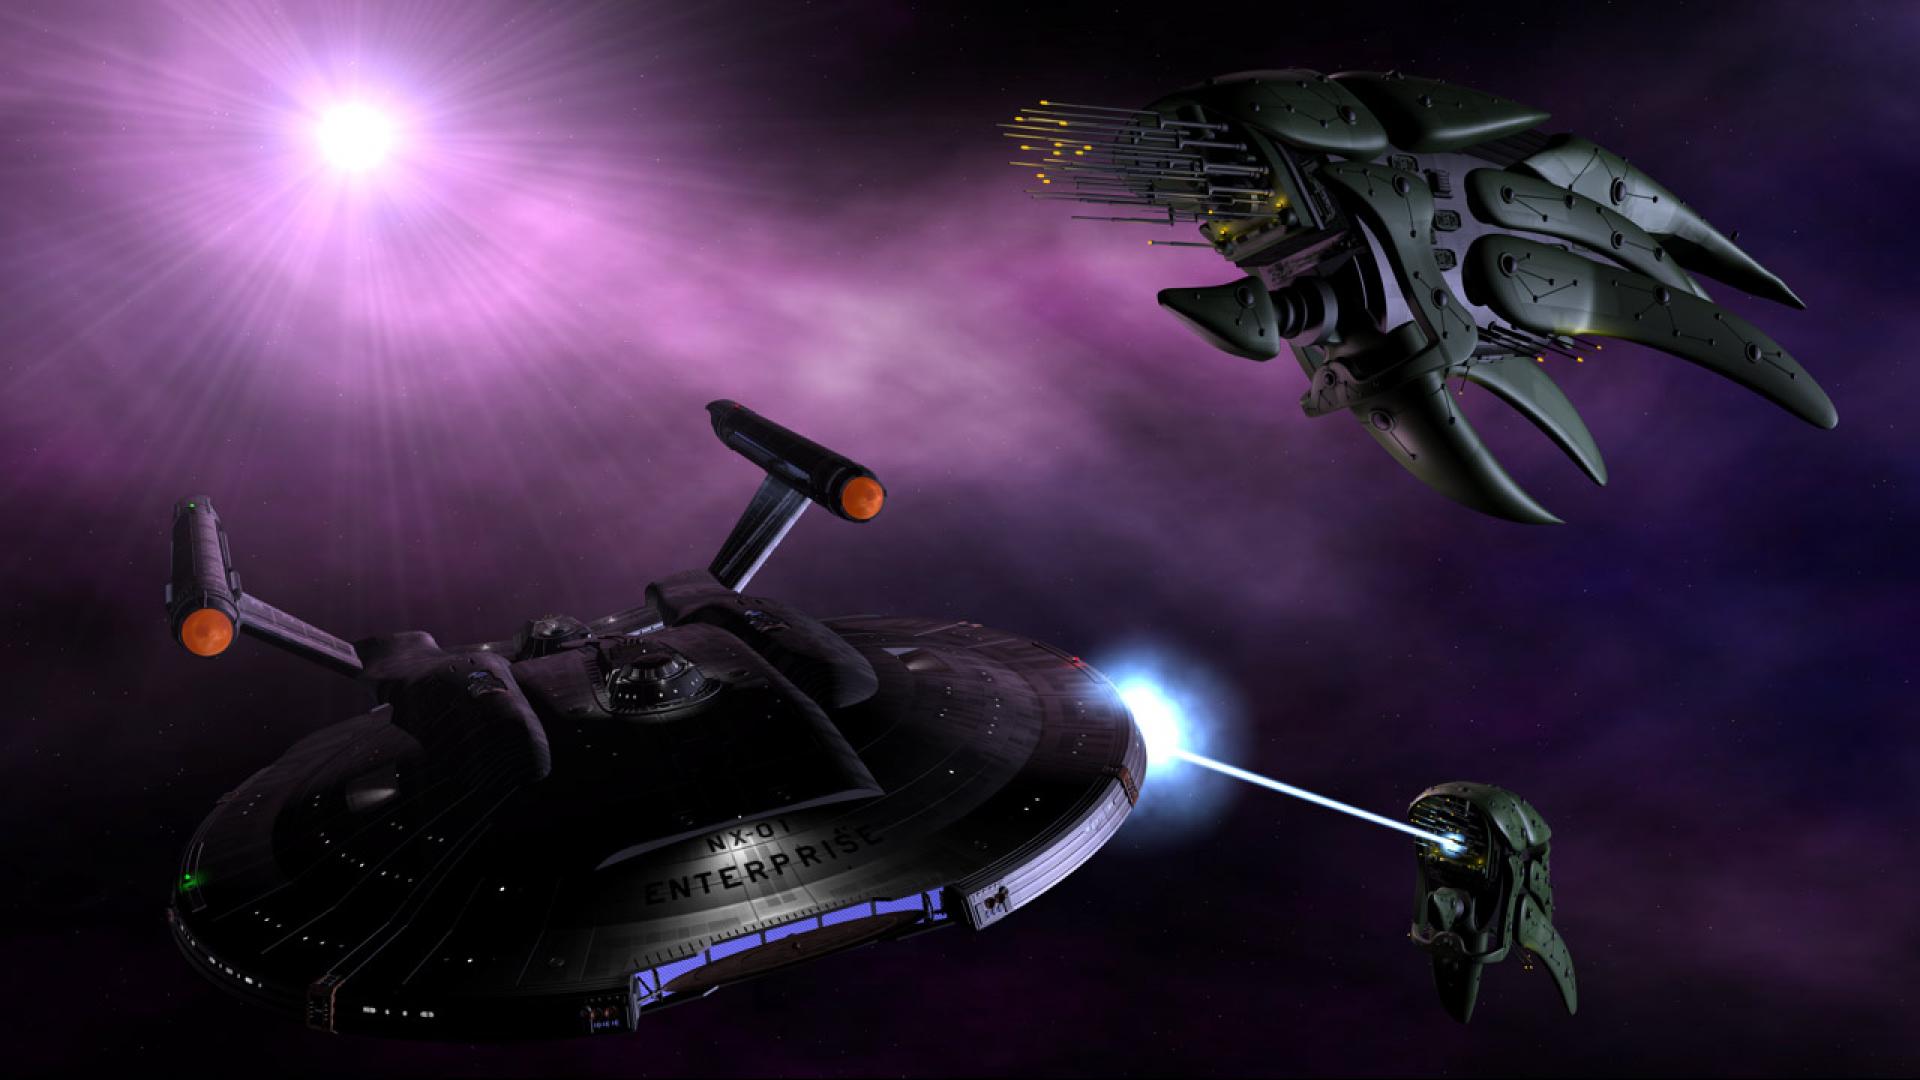 Star Trek Uss Enterprise Spaceships Vehicles Wallpaper Hq